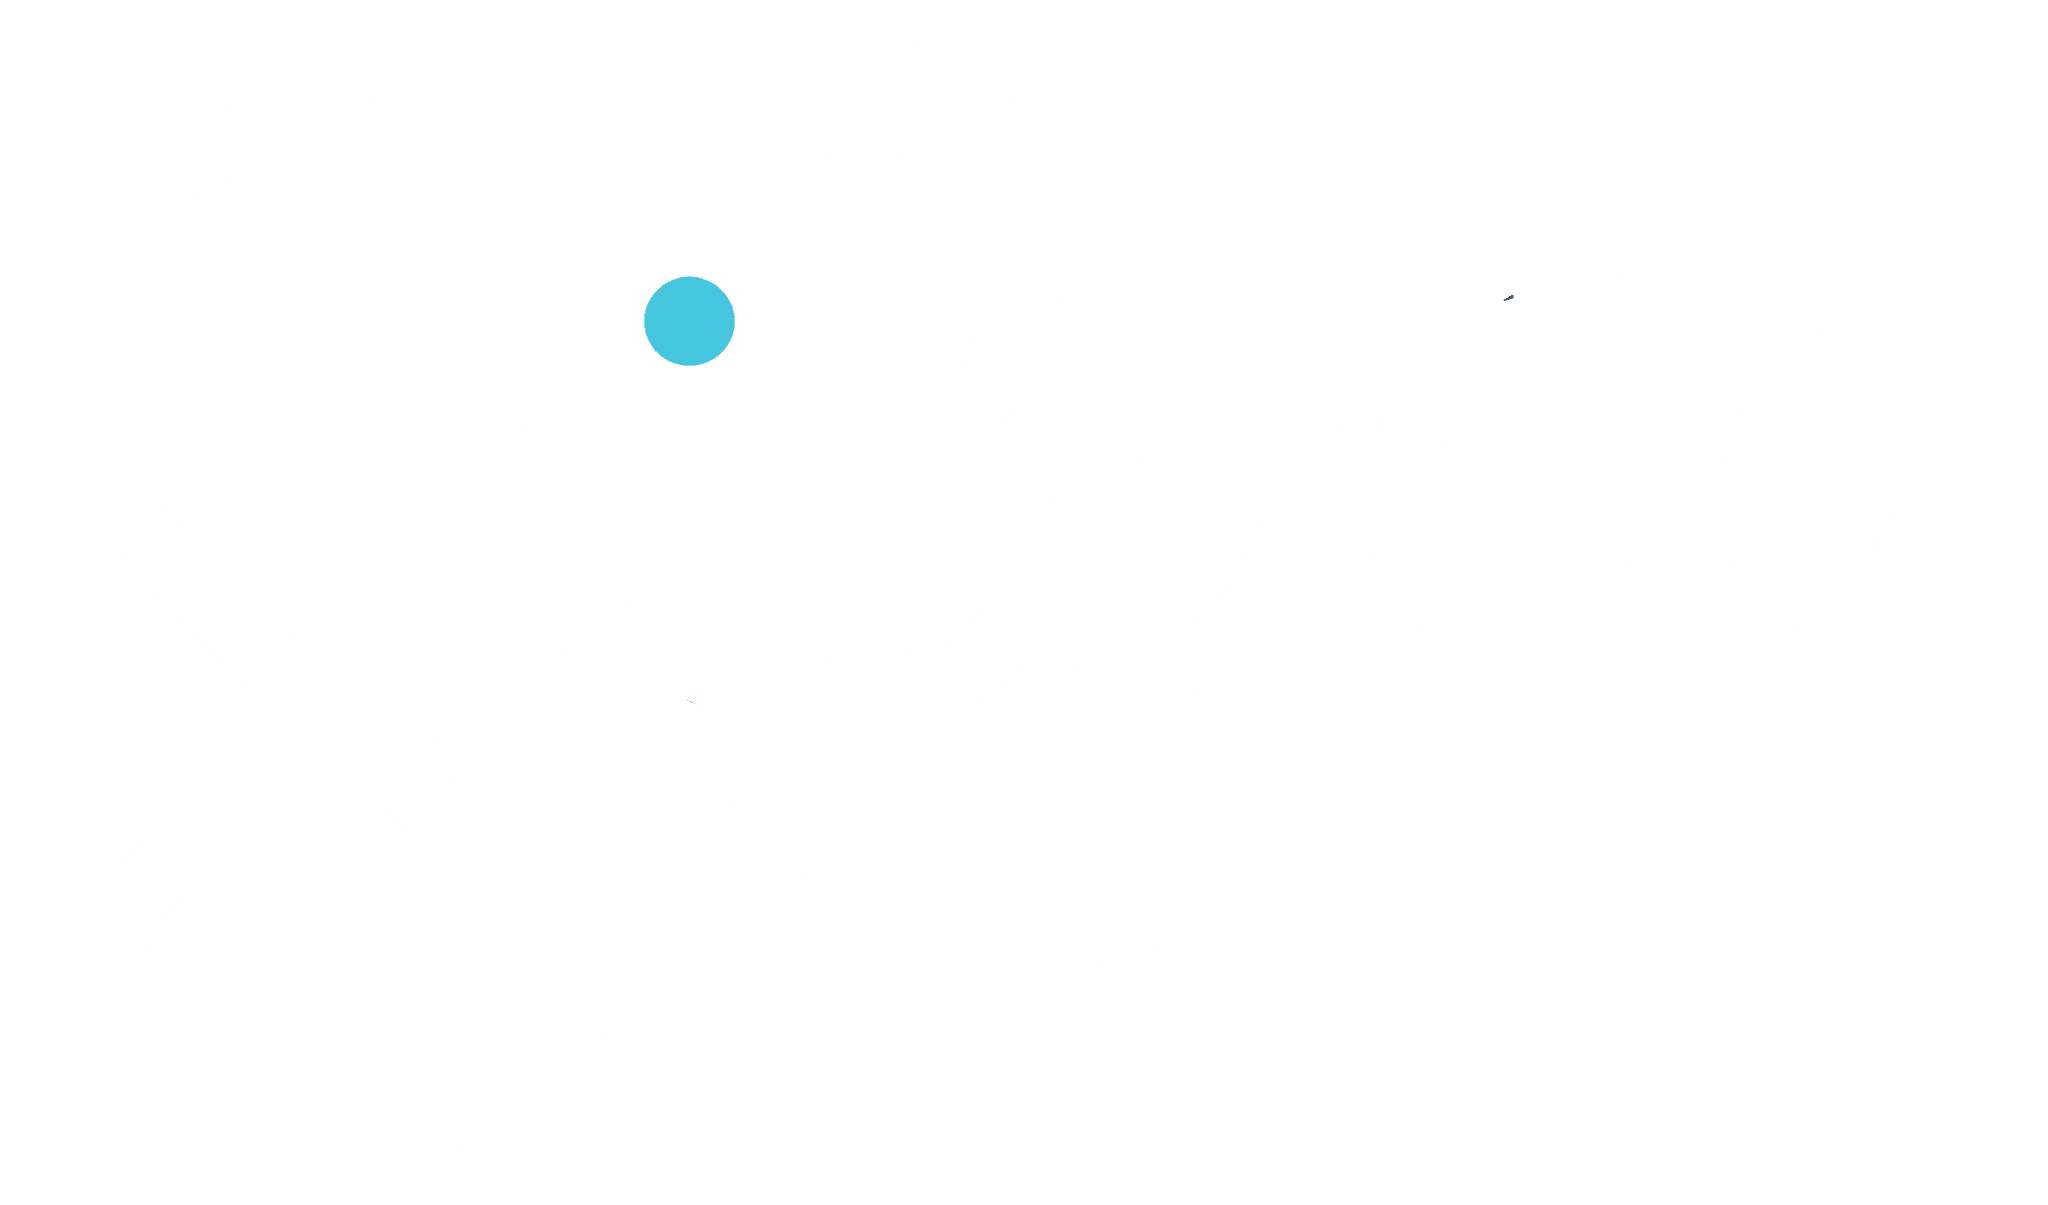 The Silver gate logo